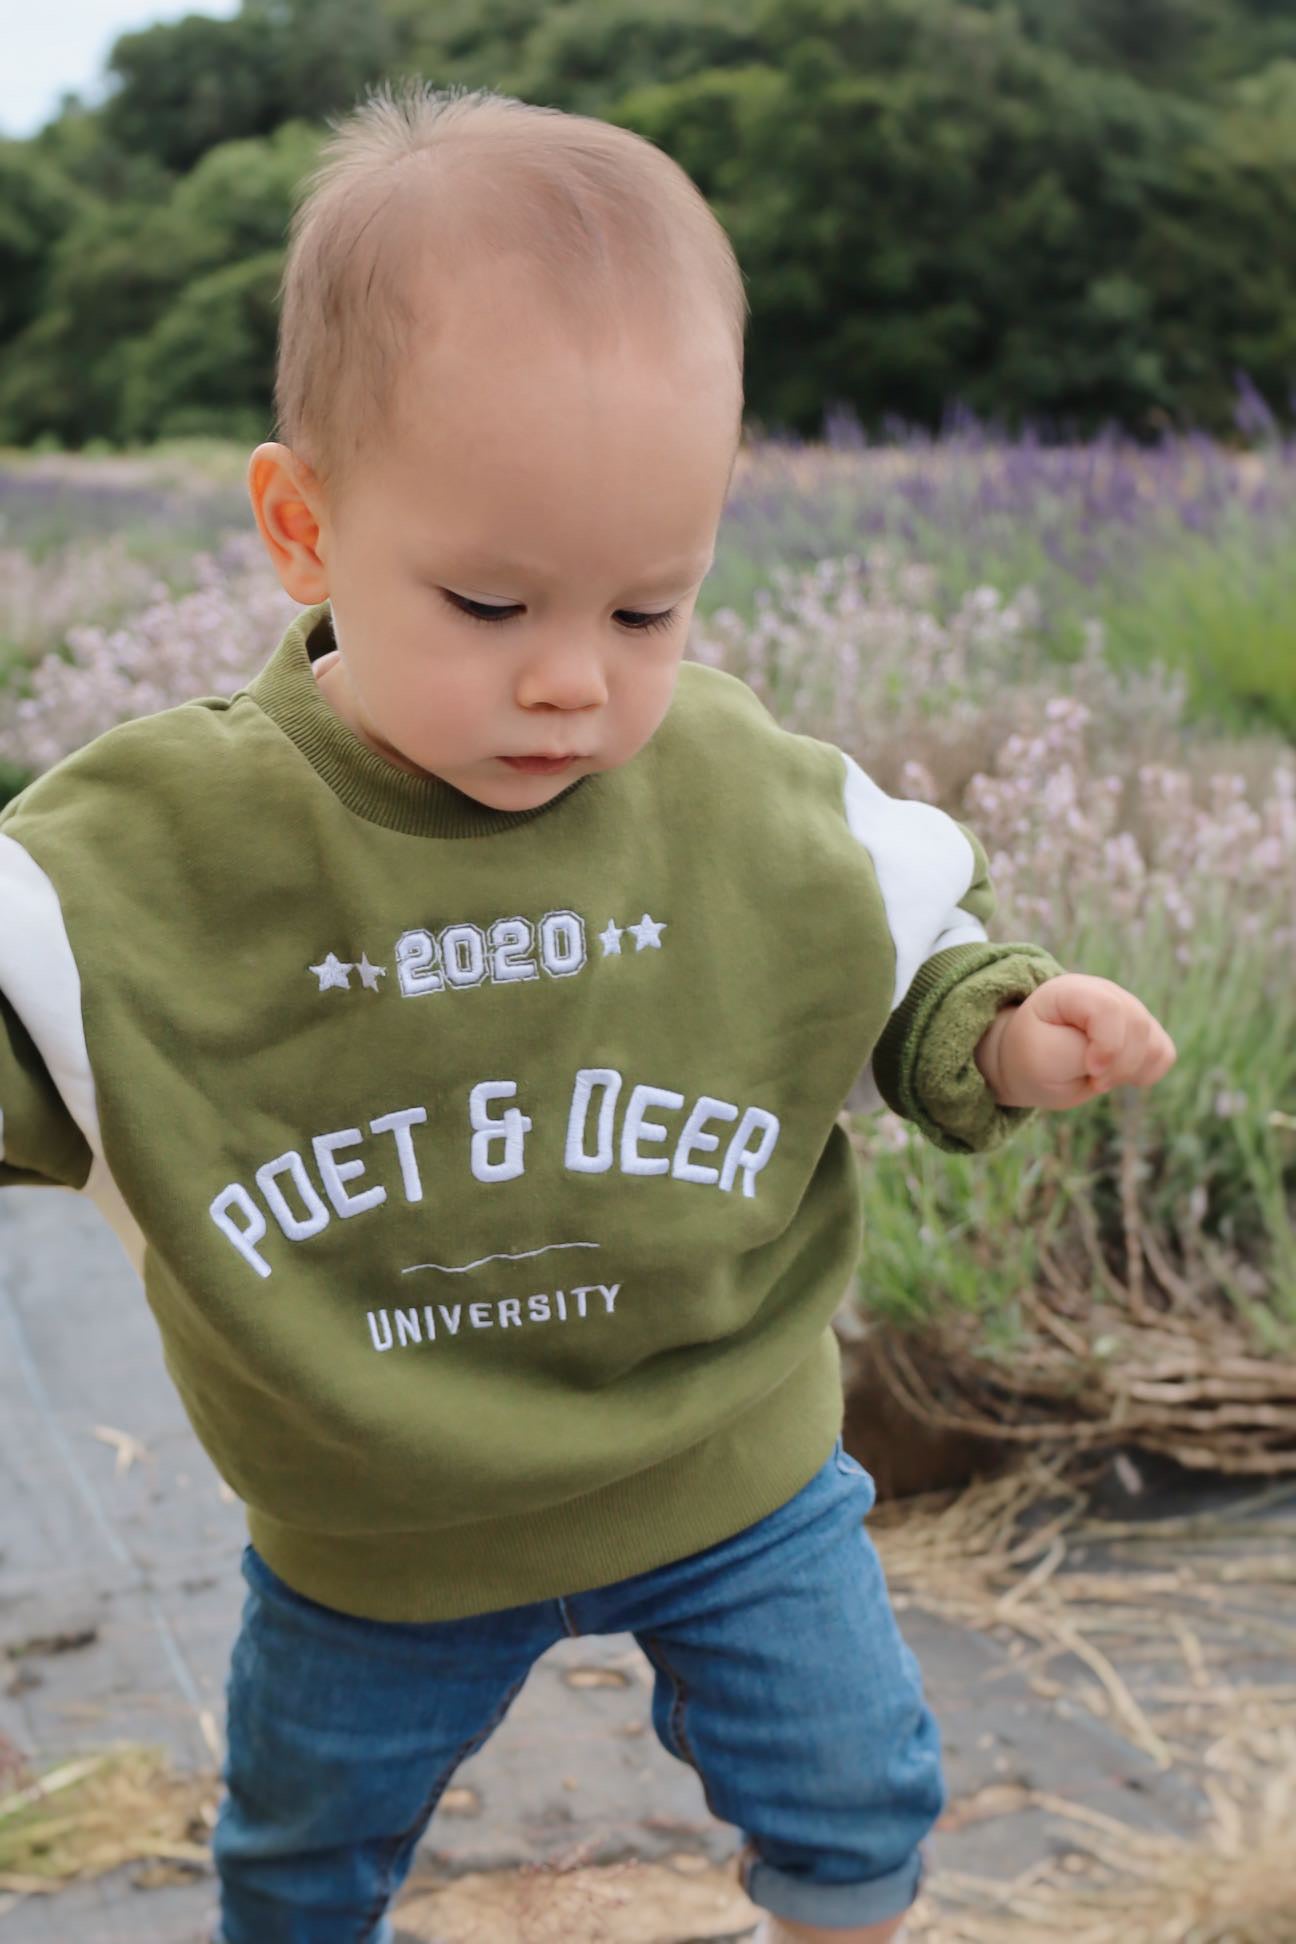 Poet & Deer University Sweatshirt | Raglan Style | 100% GOTS Organic Cotton |